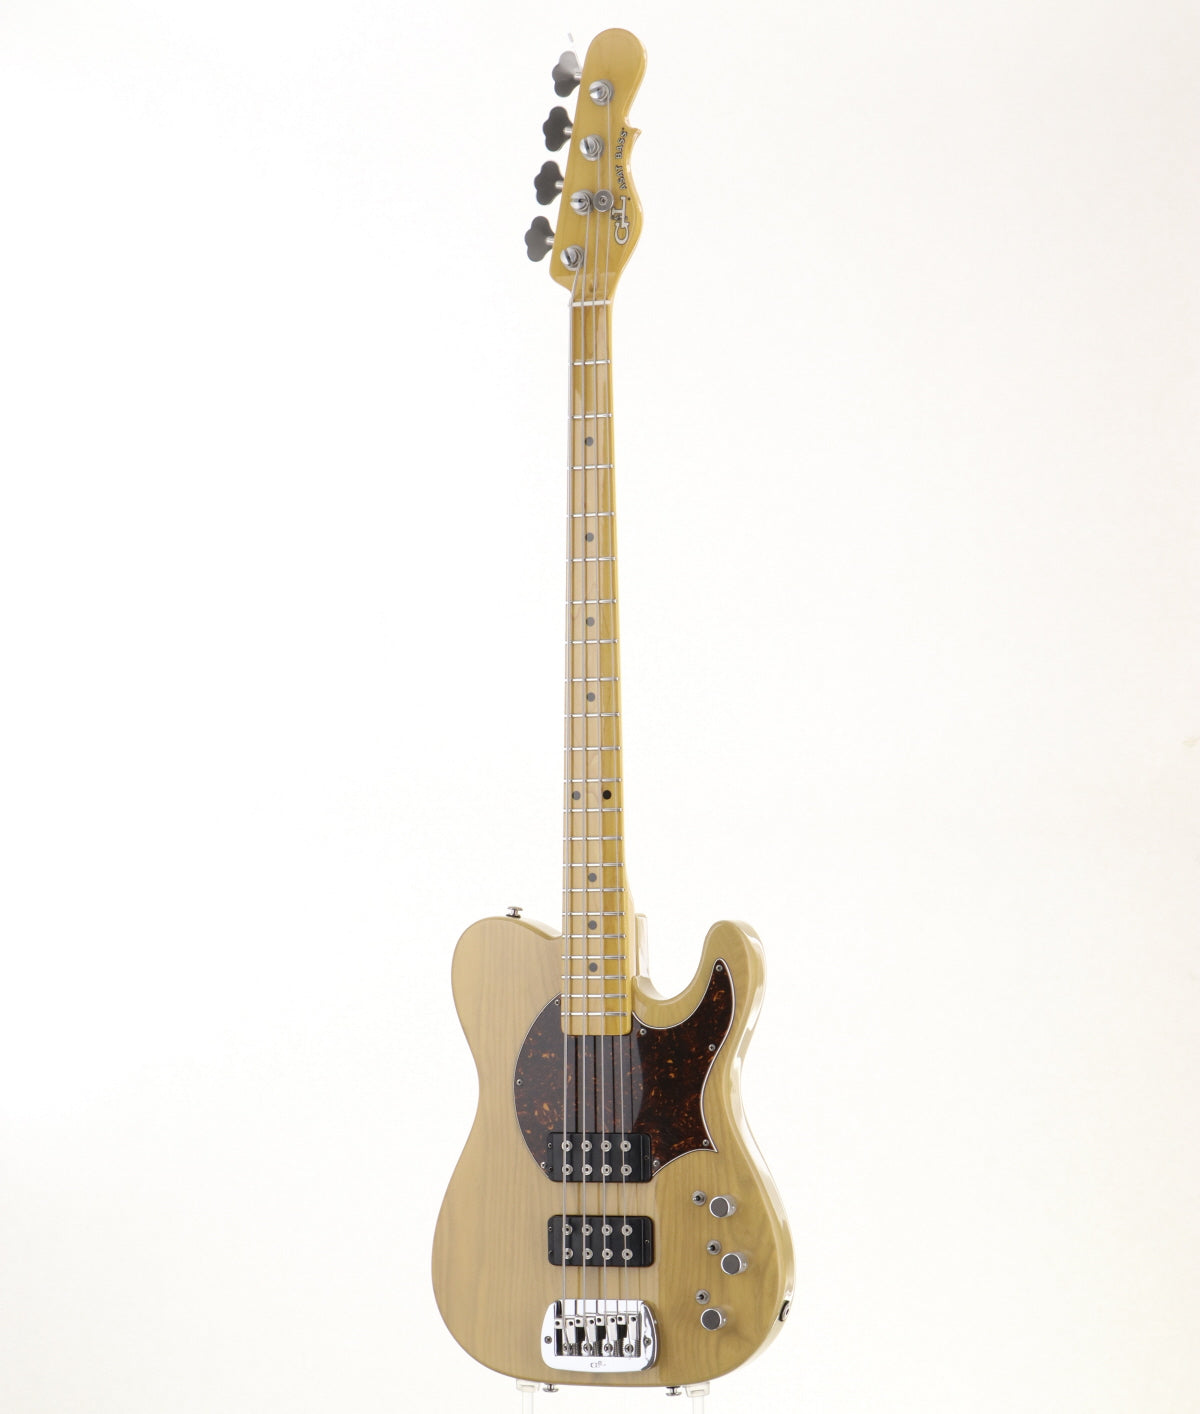 [SN CLF55858] USED G&amp;L / USA ASAT Bass Butterscotch Blonde (Active)[2009/5.06kg] G&amp;L Electric Bass [08]